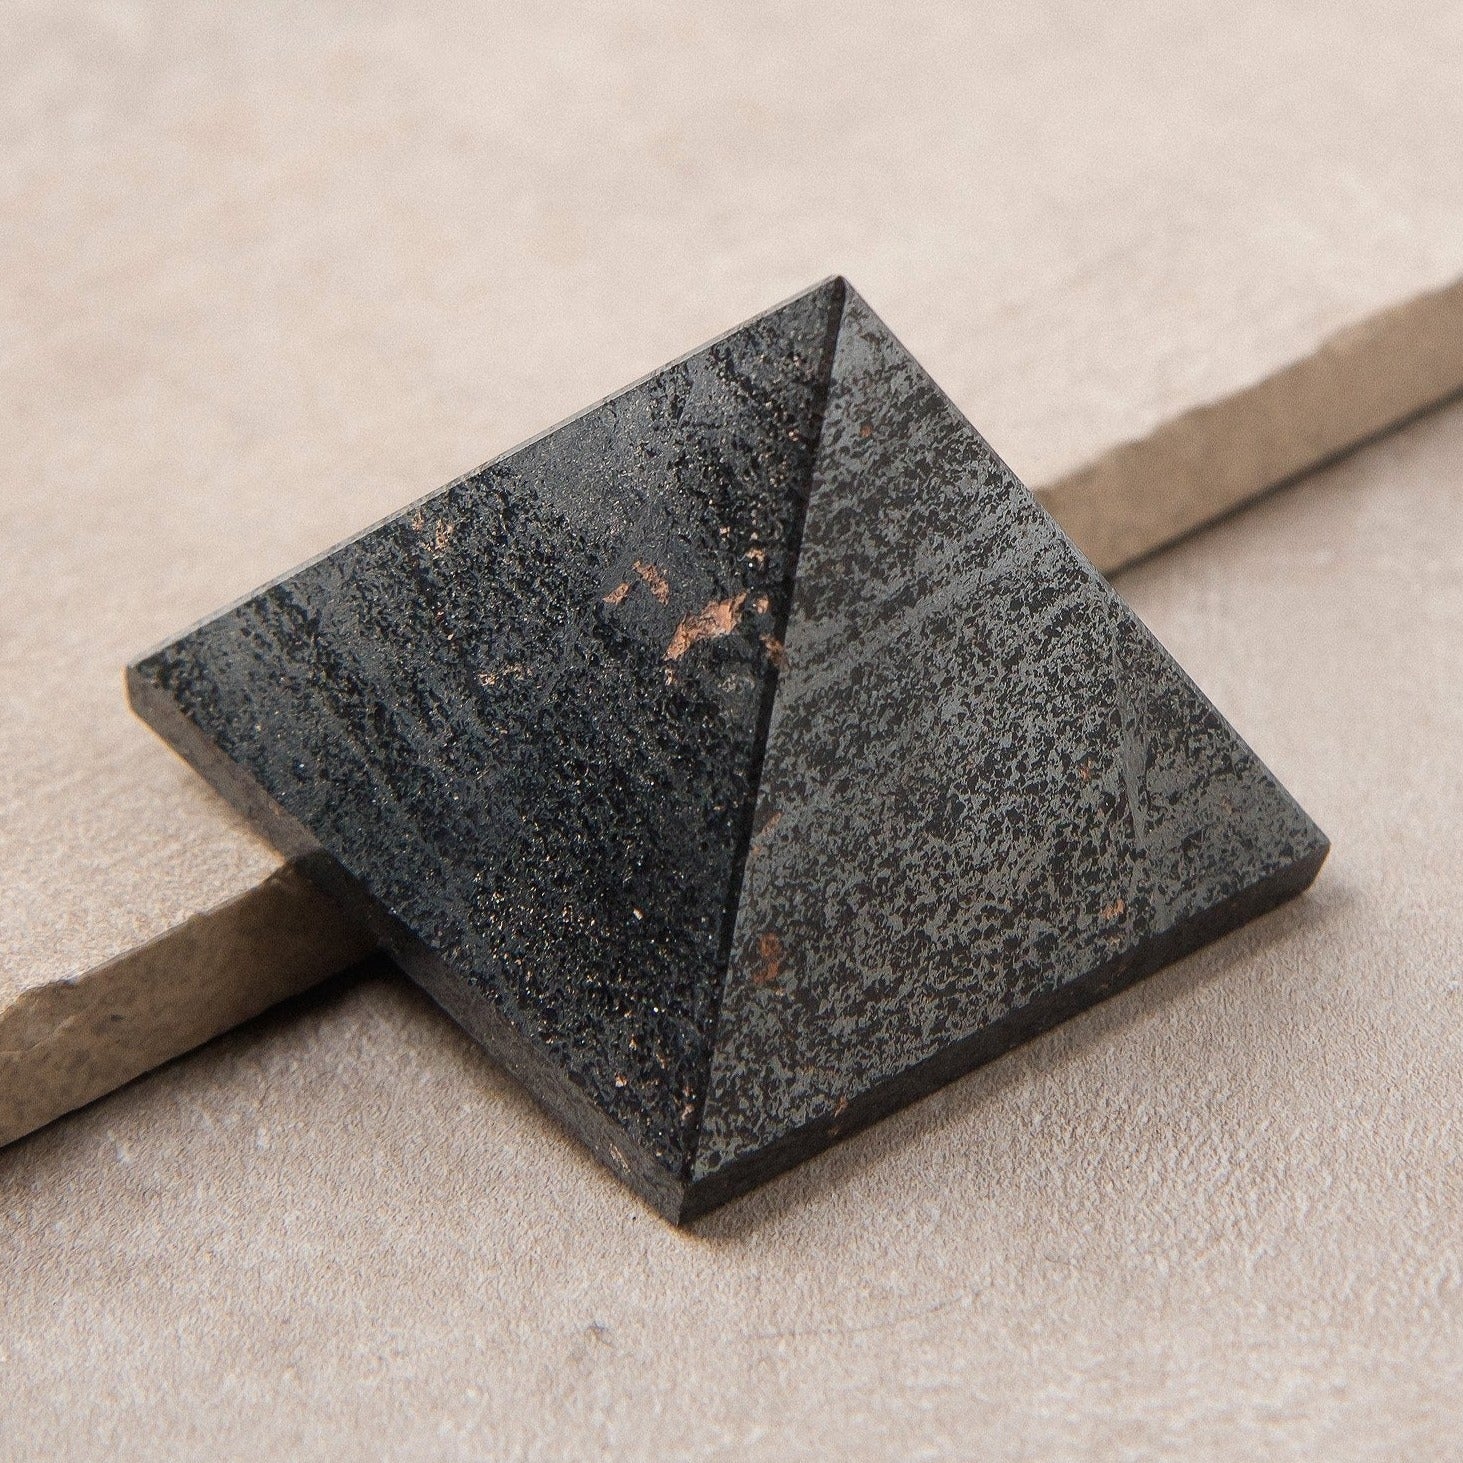  Hematite Pyramid by Tiny Rituals Tiny Rituals Perfumarie